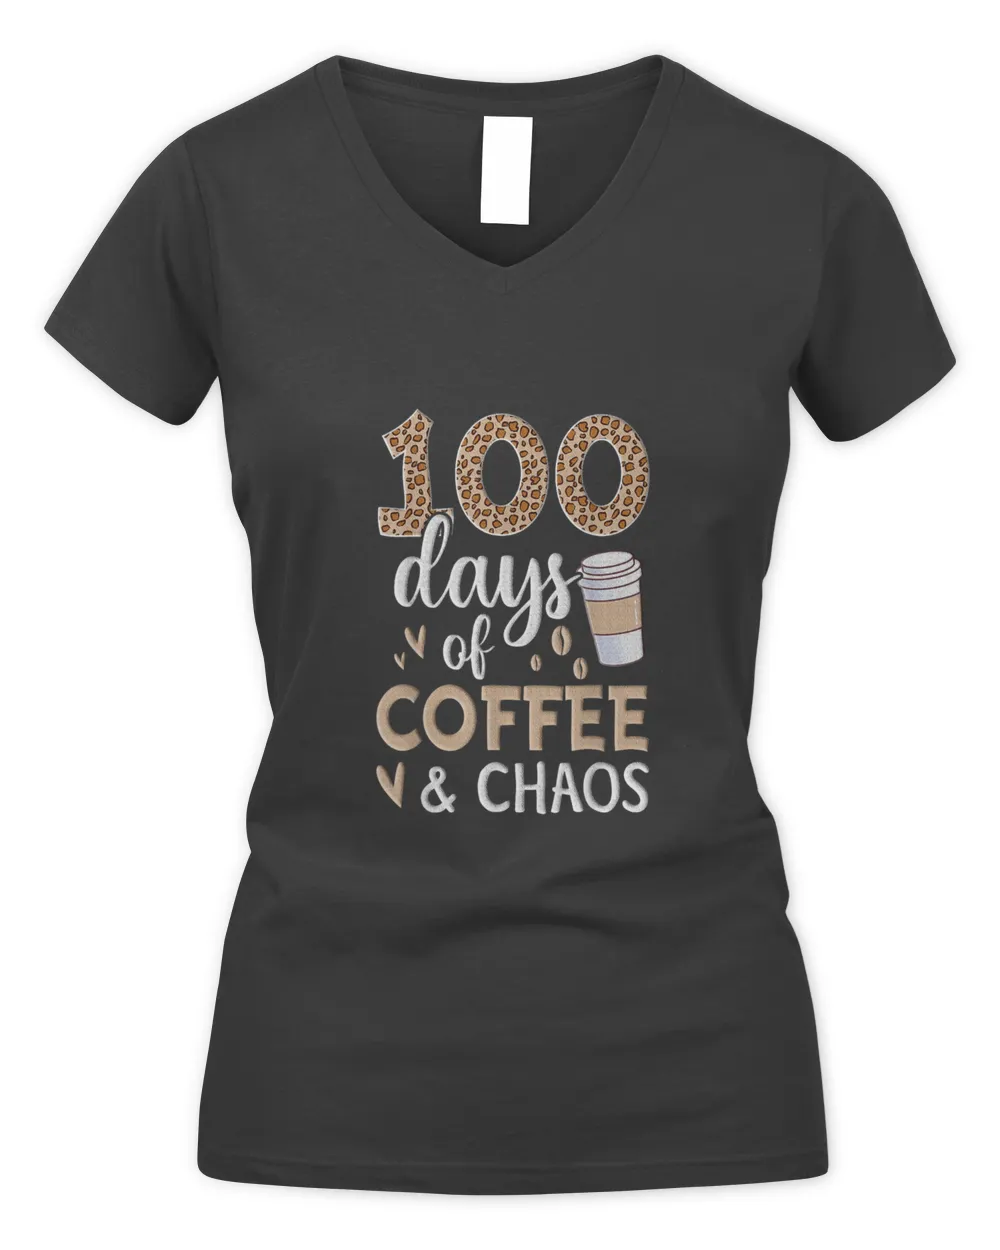 100 Days Of School Coffee Lover 100Th Day Of School Teacher